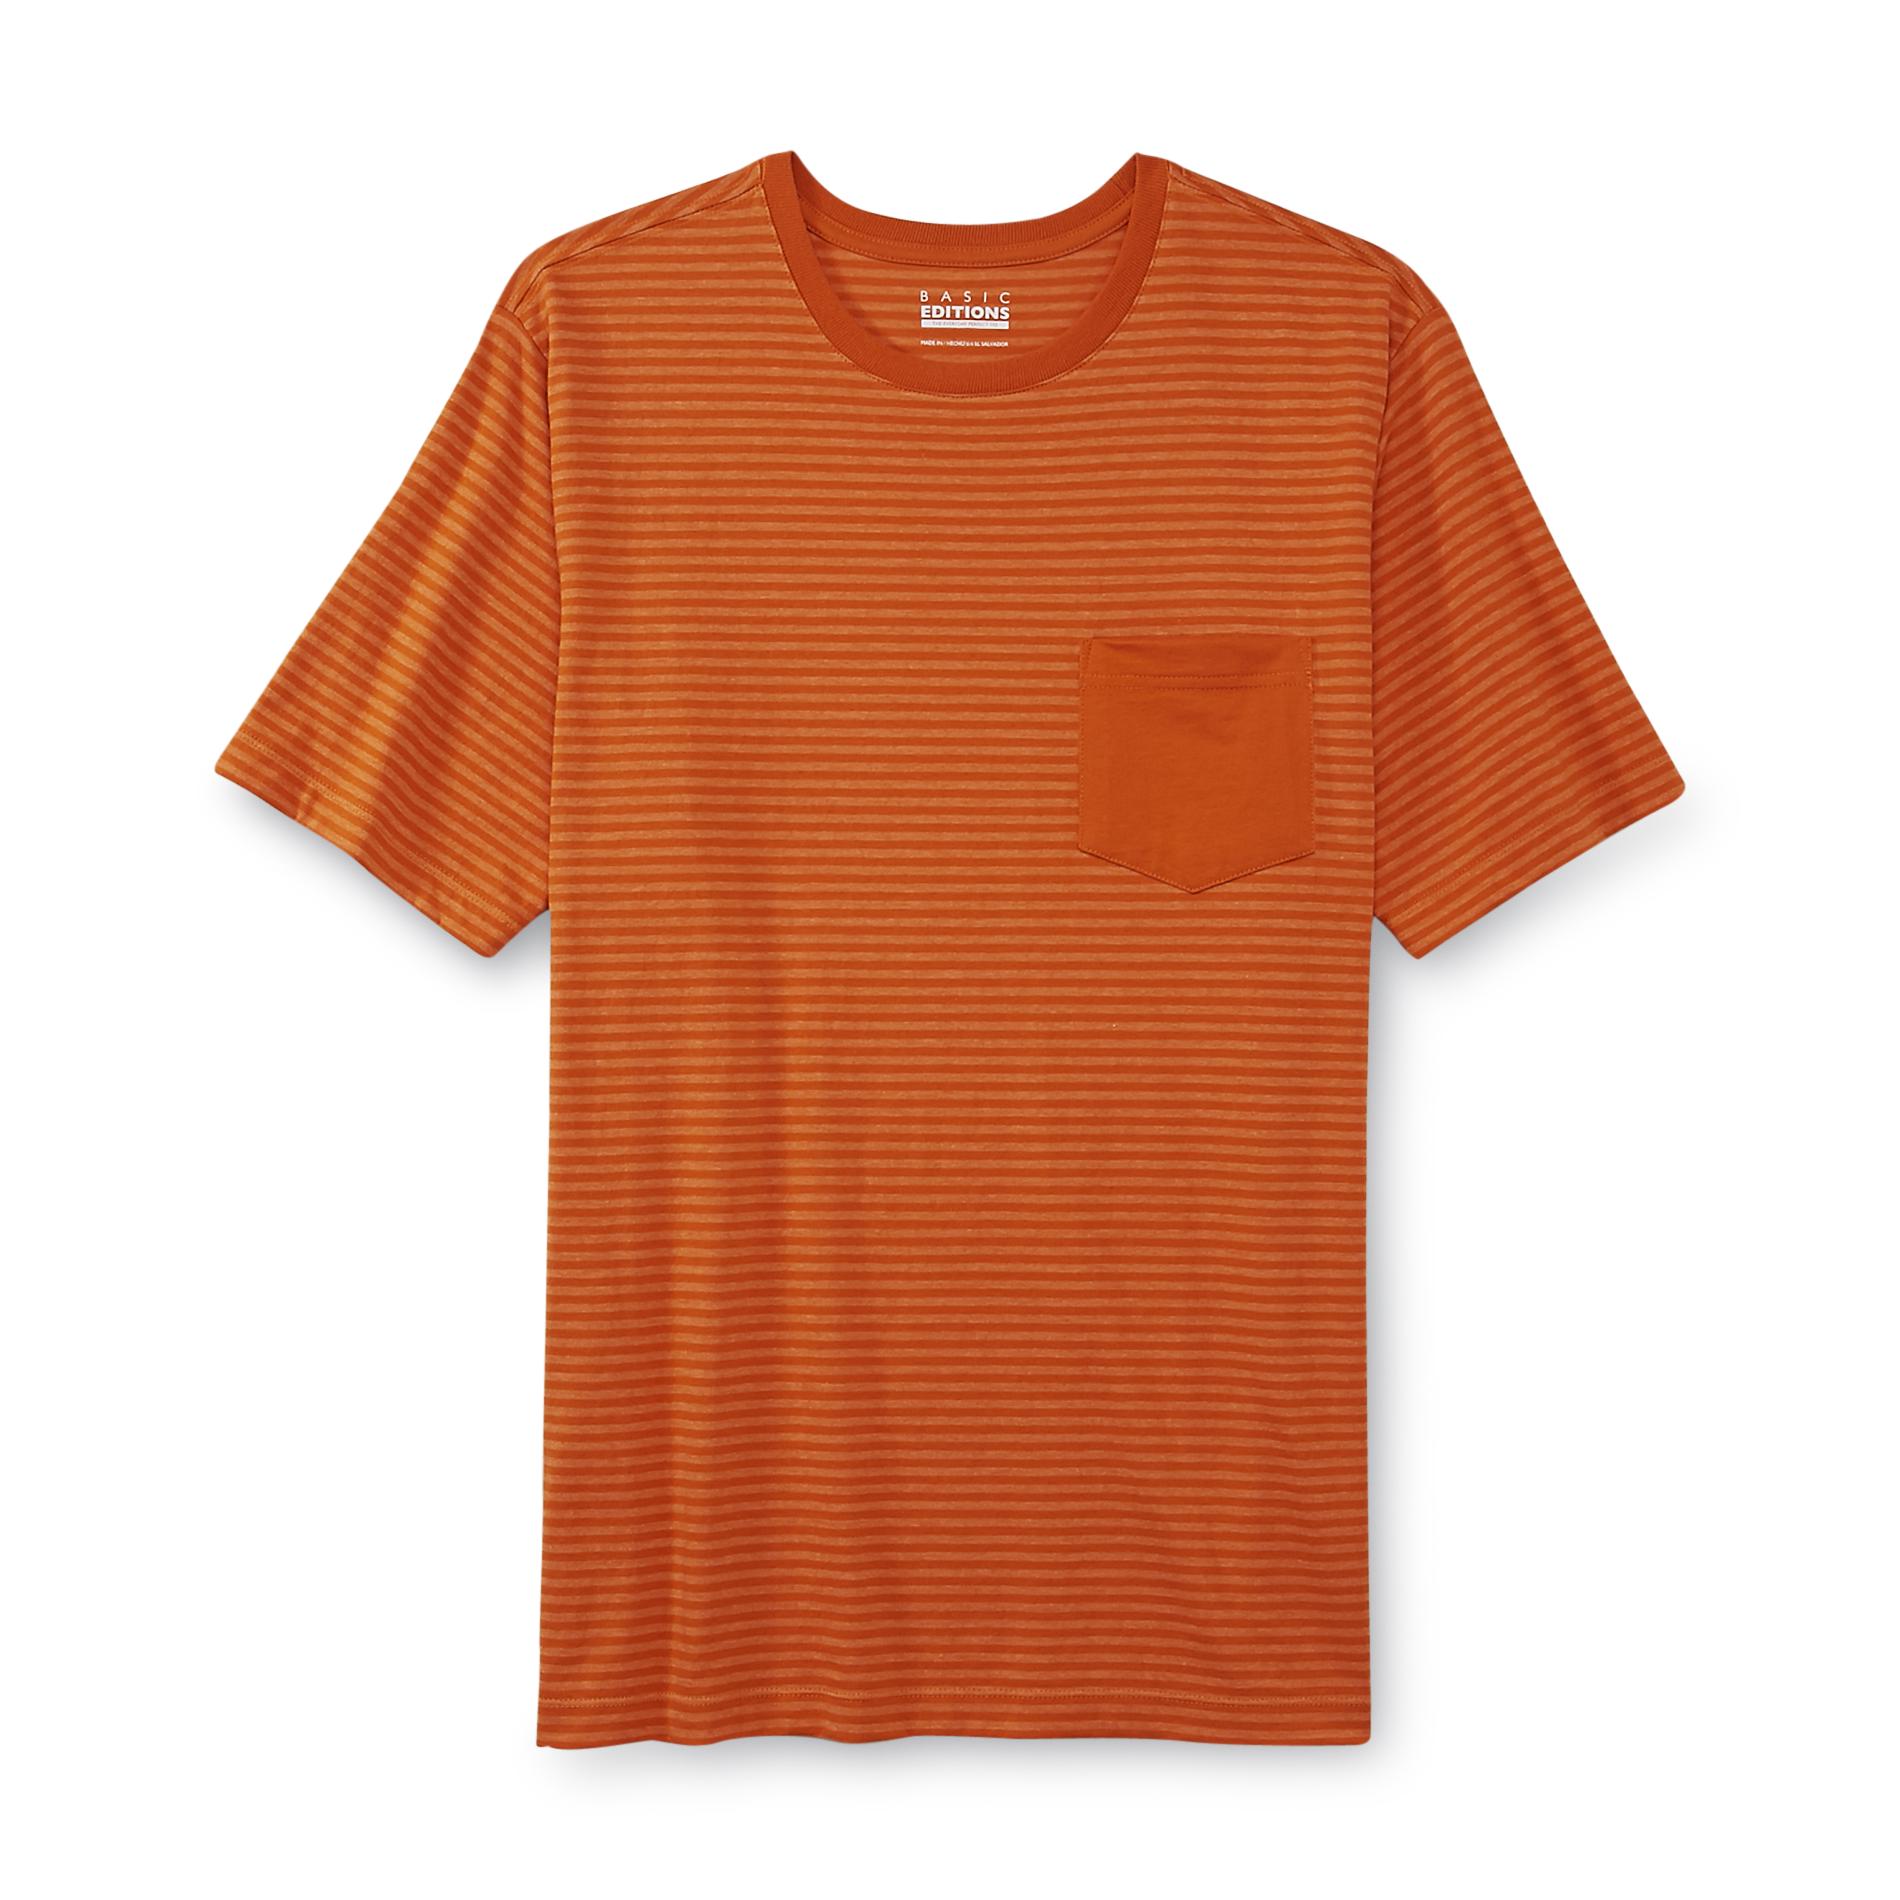 Basic Editions Men's Pocket T-Shirt - Heathered Stripes